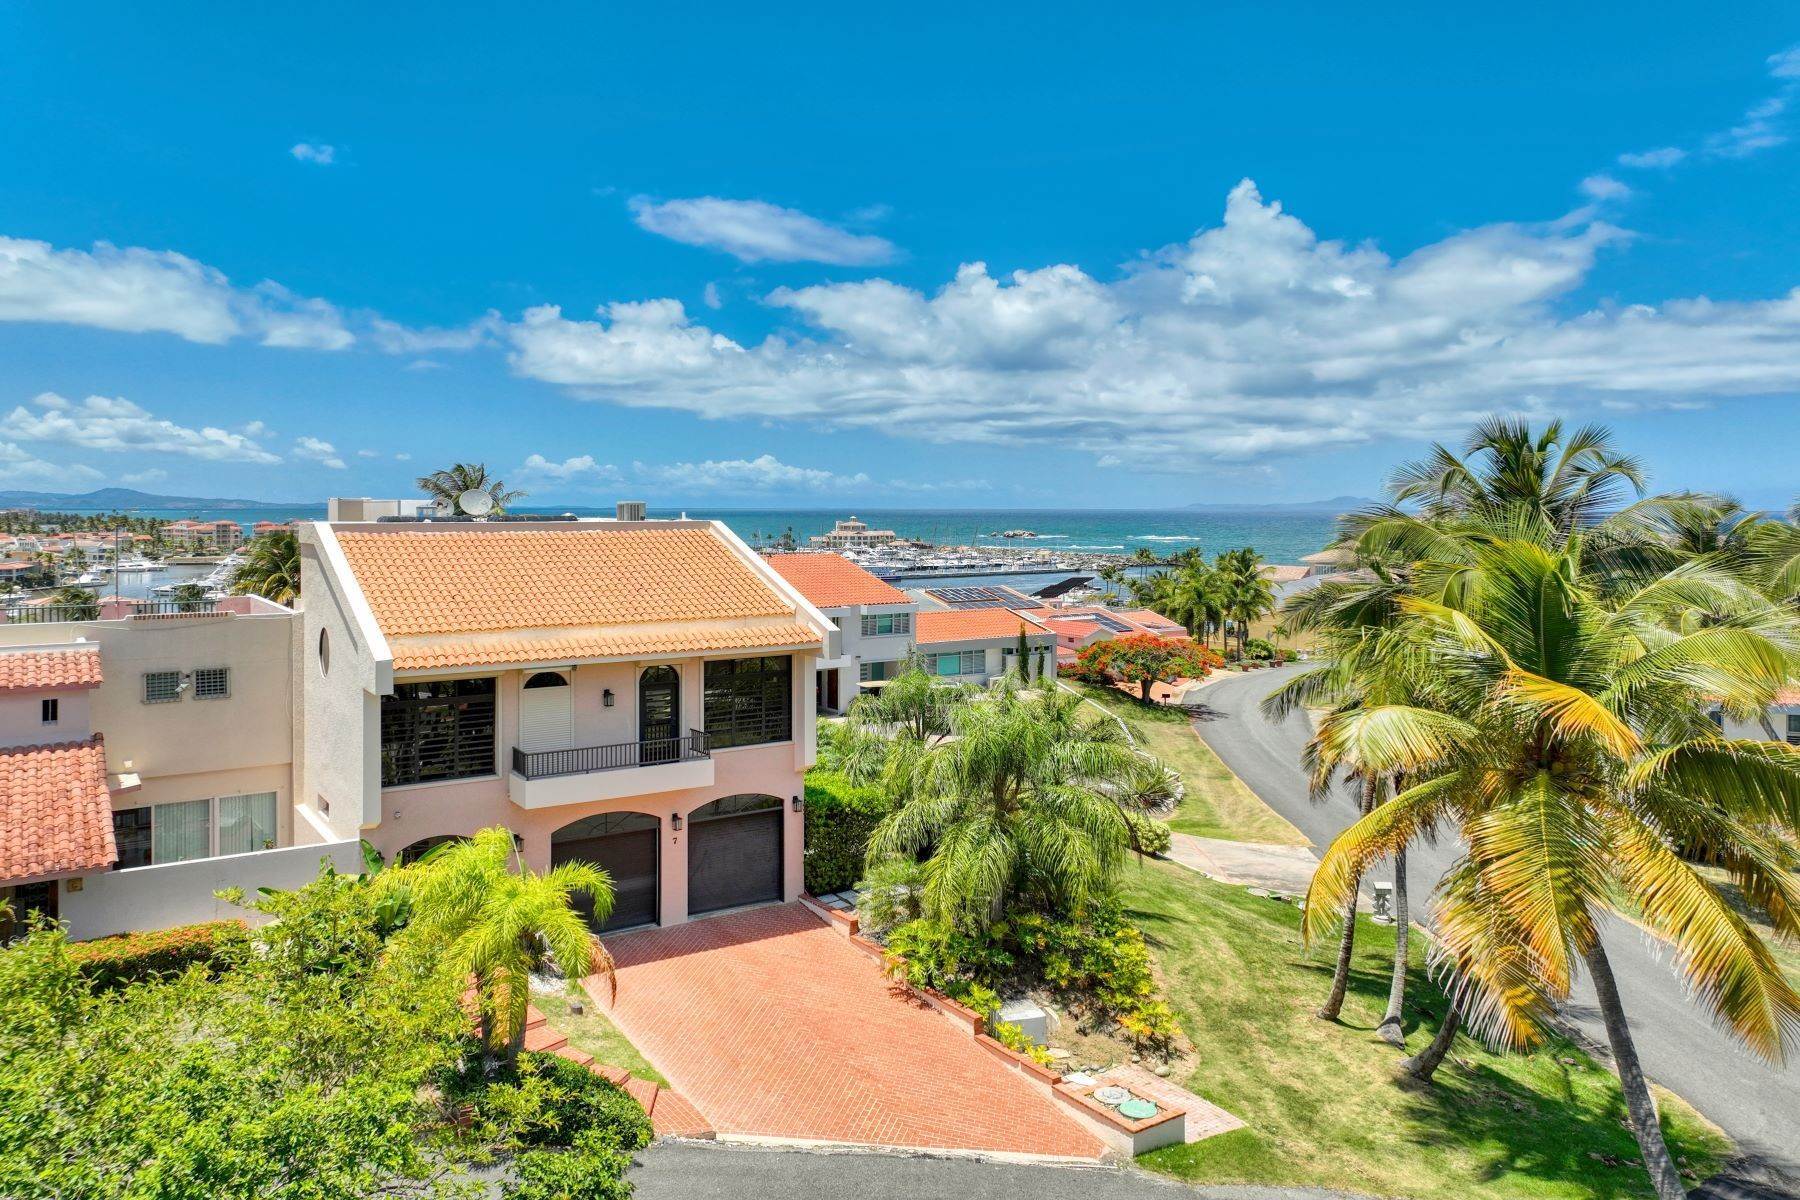 Property for Sale at Harbour View Mediterranean Villa 7 Harbour View Palmas Del Mar, 00791 Puerto Rico